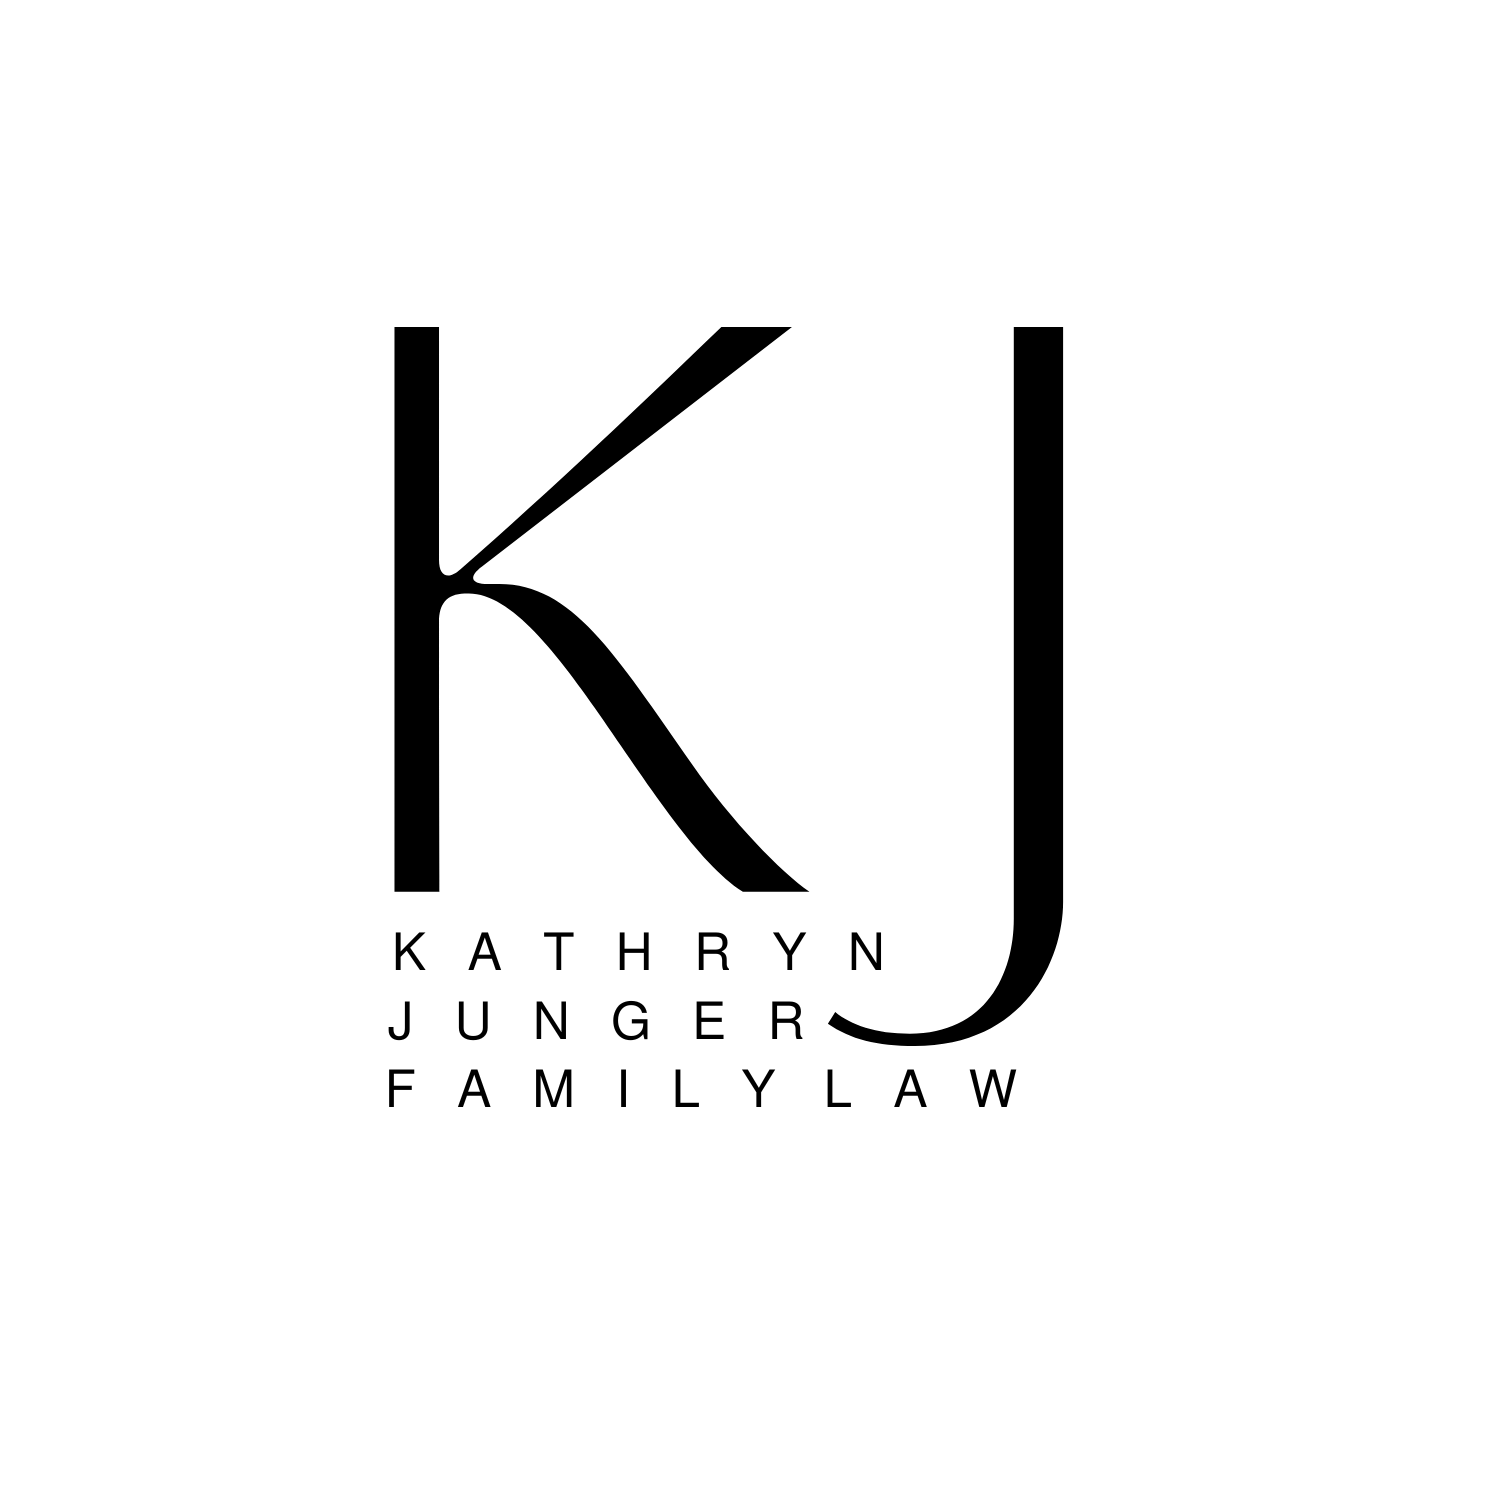 Kathryn Junger Family Law